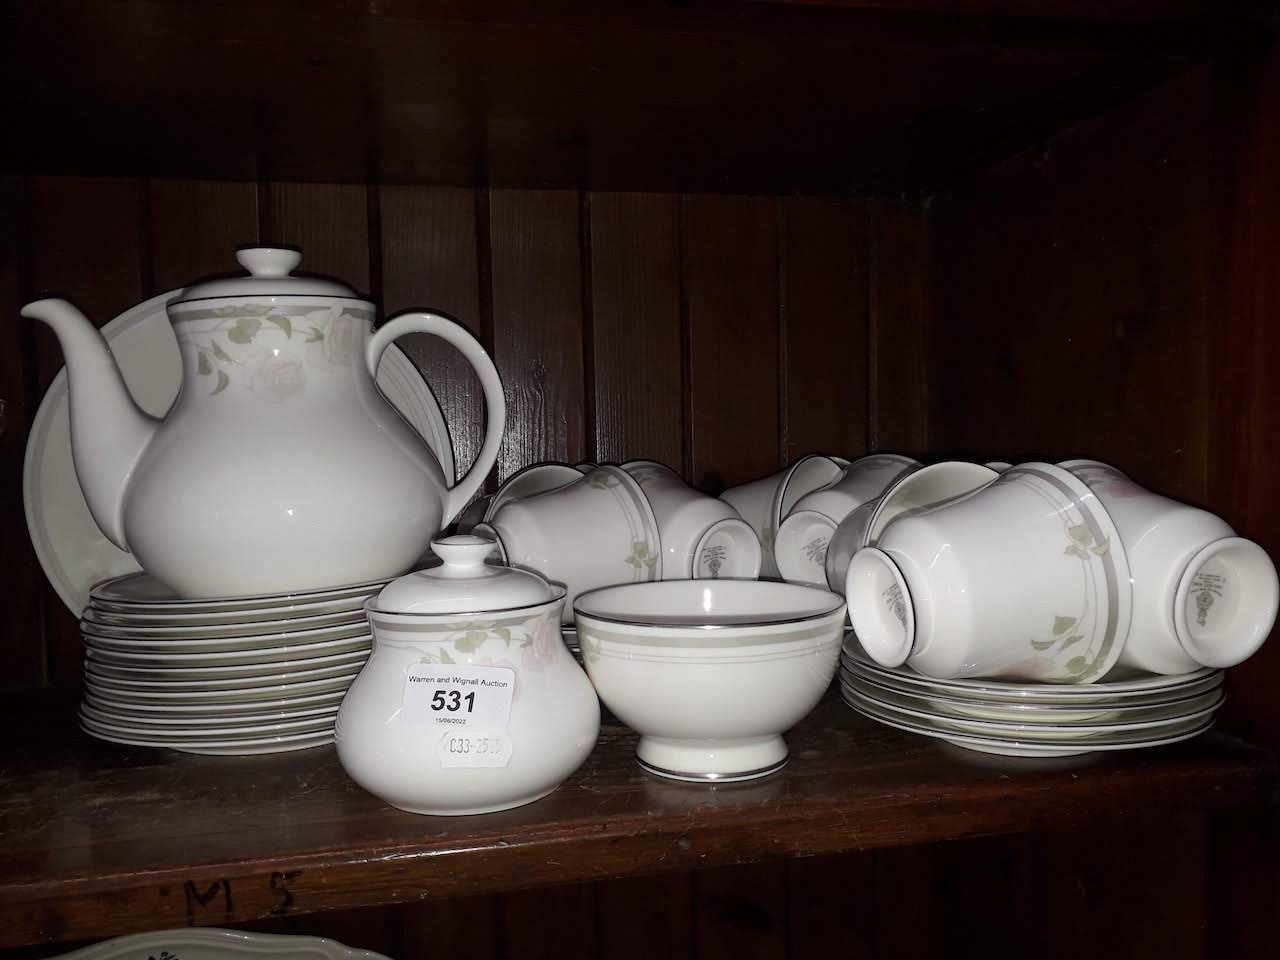 Royal Doulton Twilight Rose tea wares including teapot - appx 41 pieces